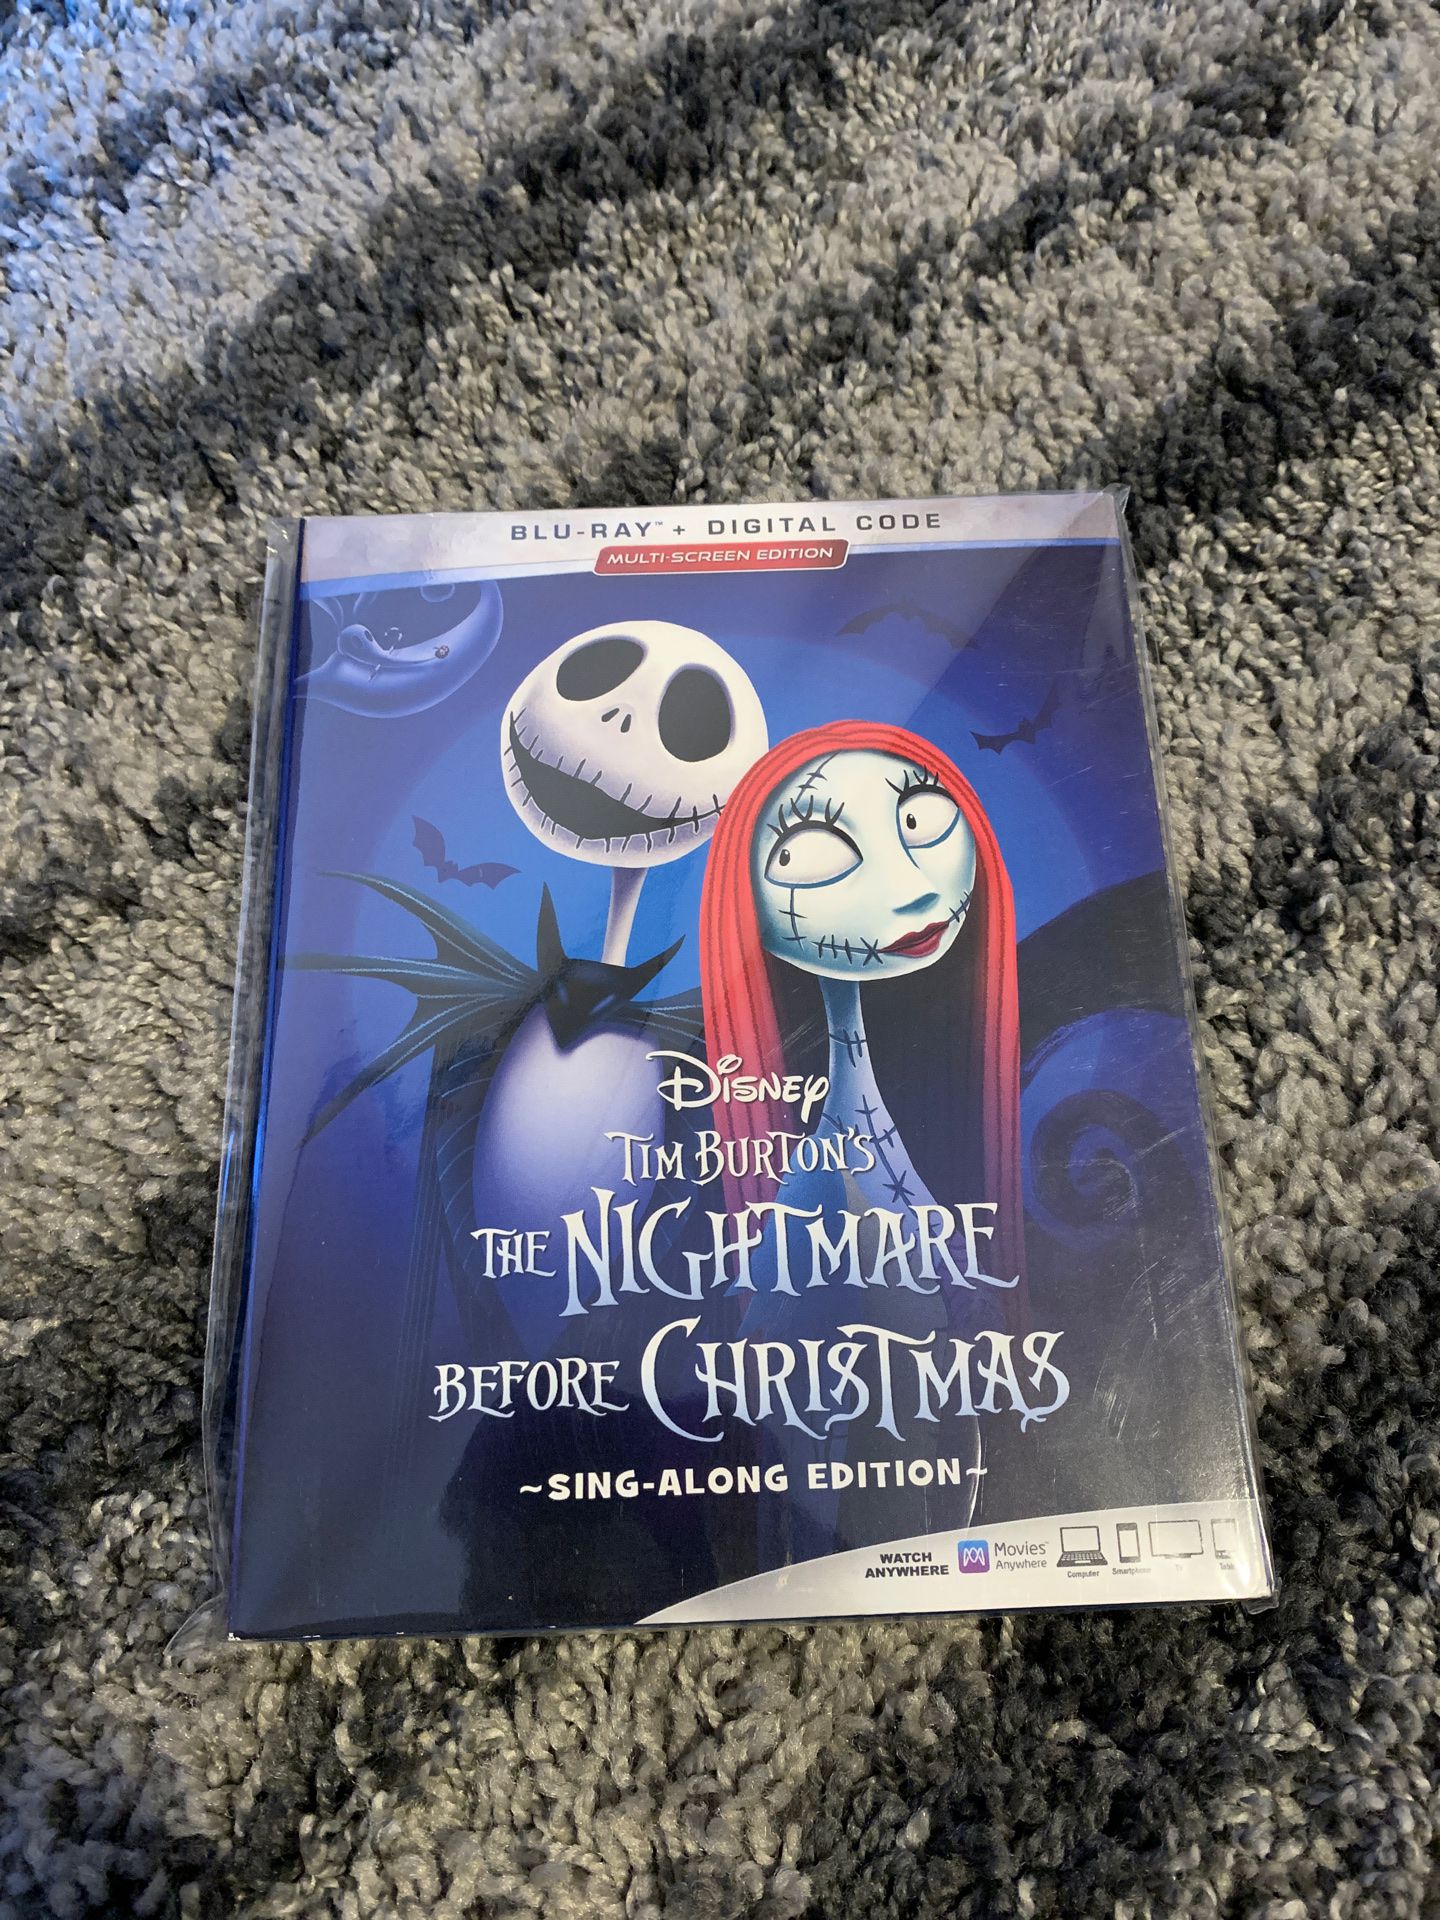 The night before Christmas Blu-ray